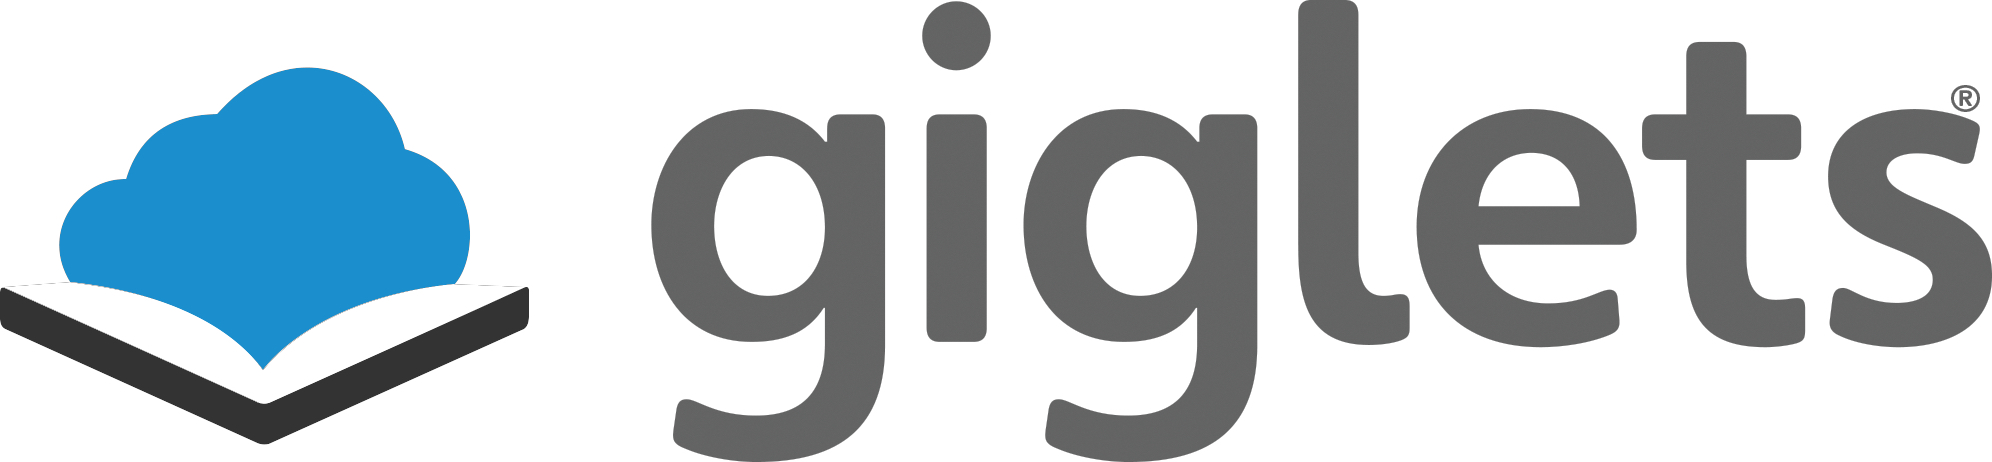 logo for Giglets Education